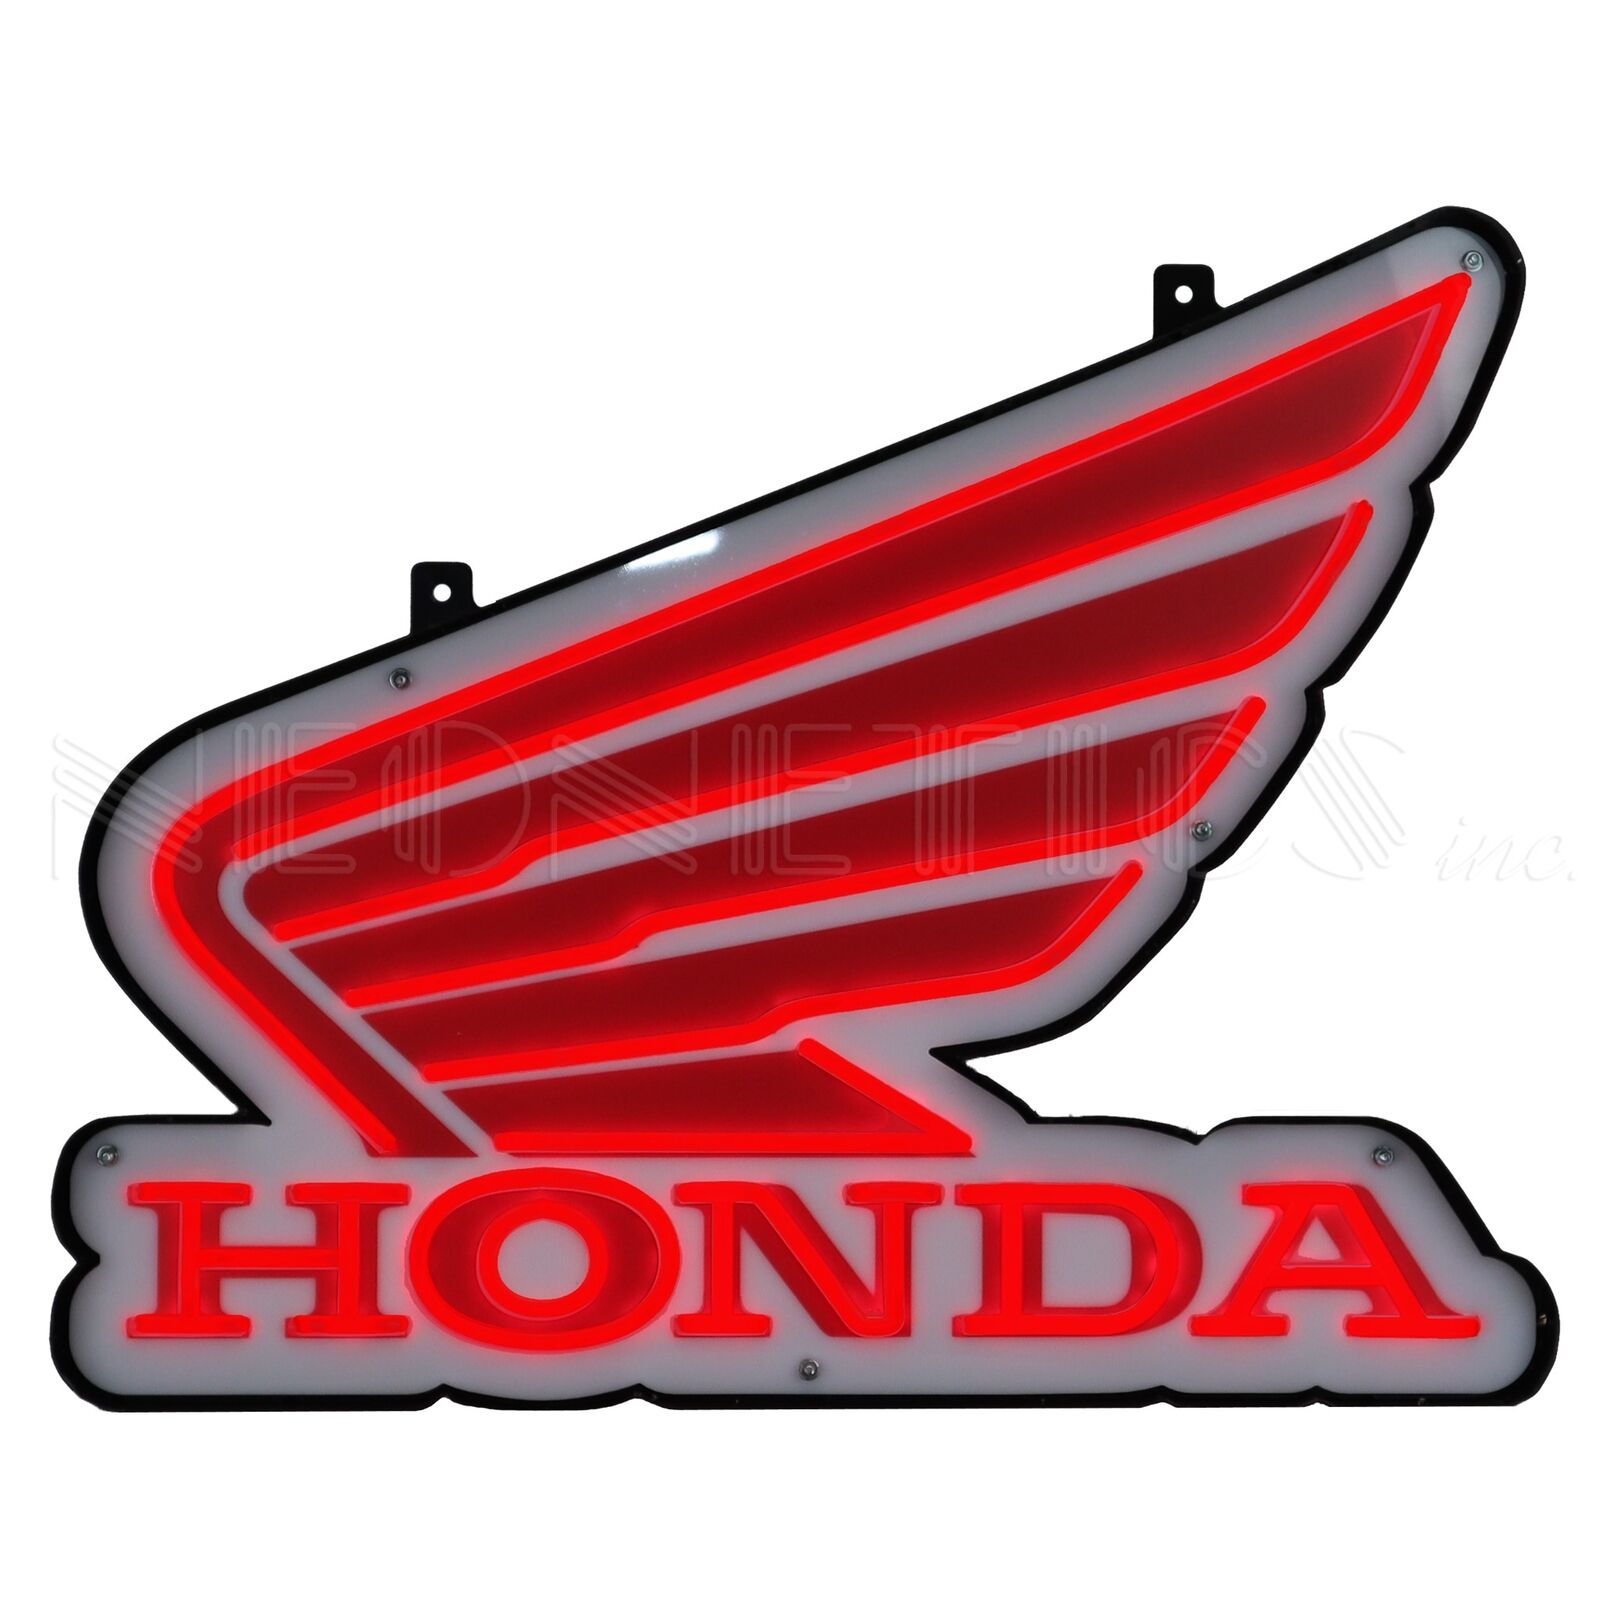 Honda Neon Sign Handmade LED Flex Neon Light for Car Garage or Man Cave